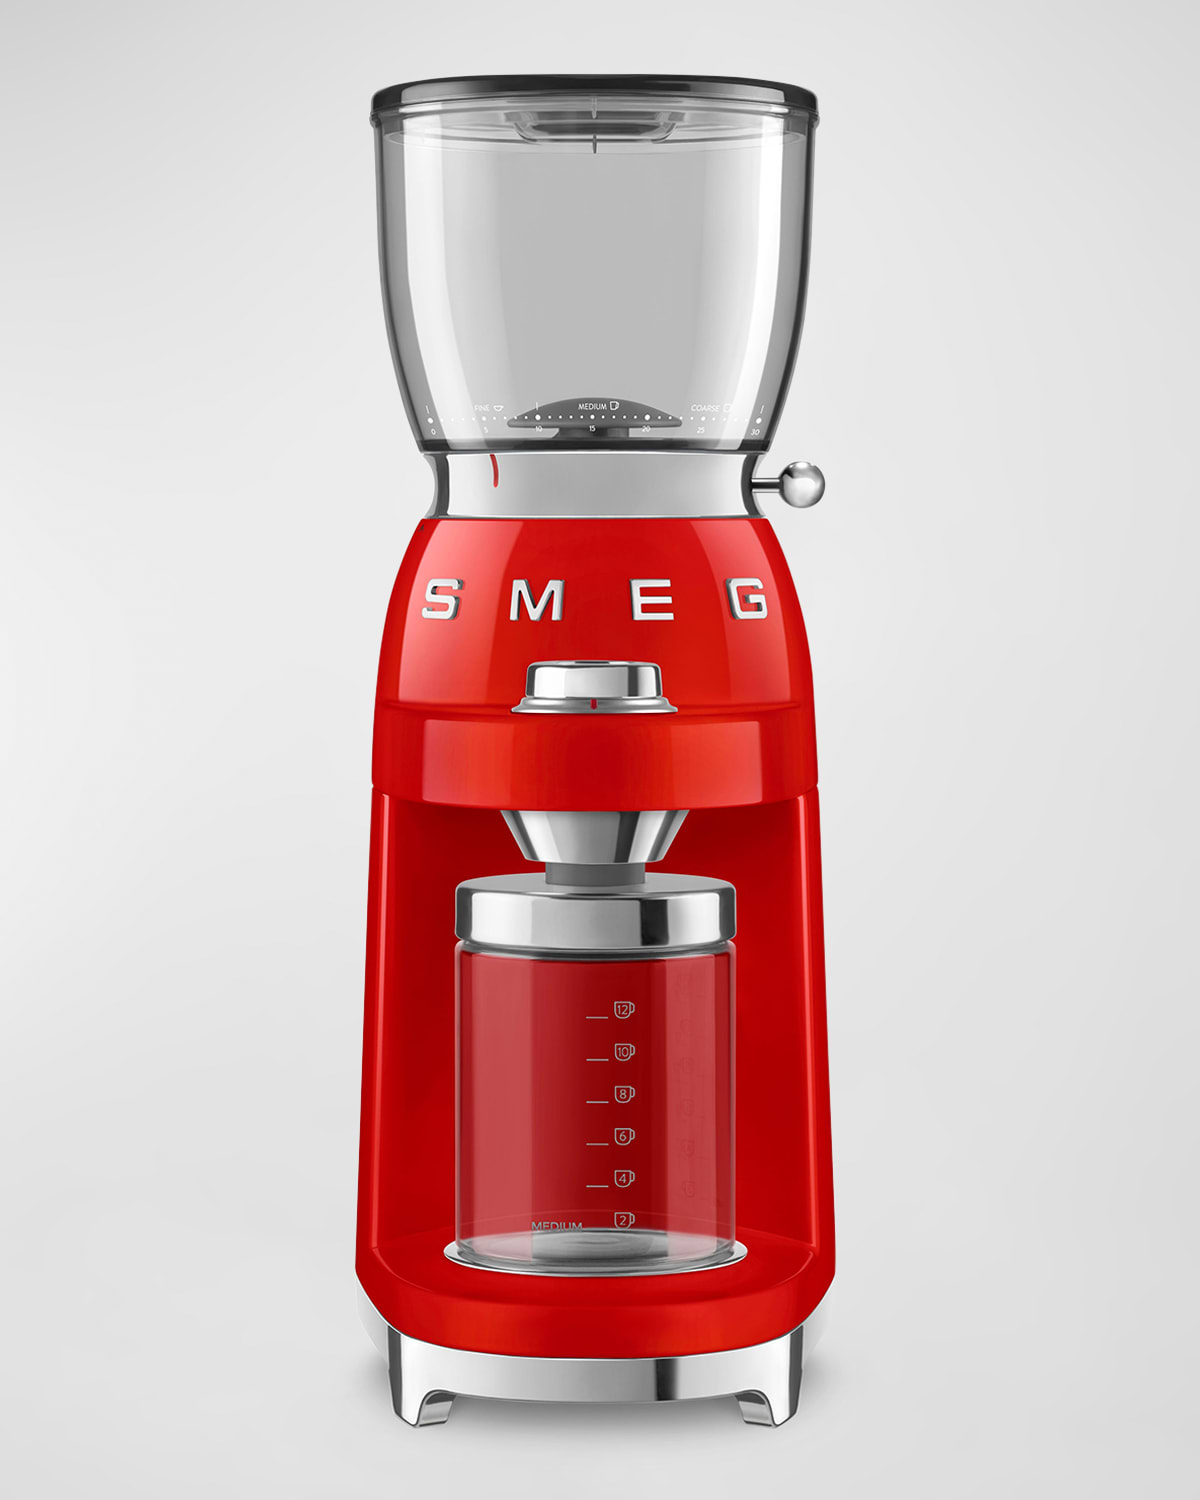 Smeg Cgf11 Coffee Grinder In Red